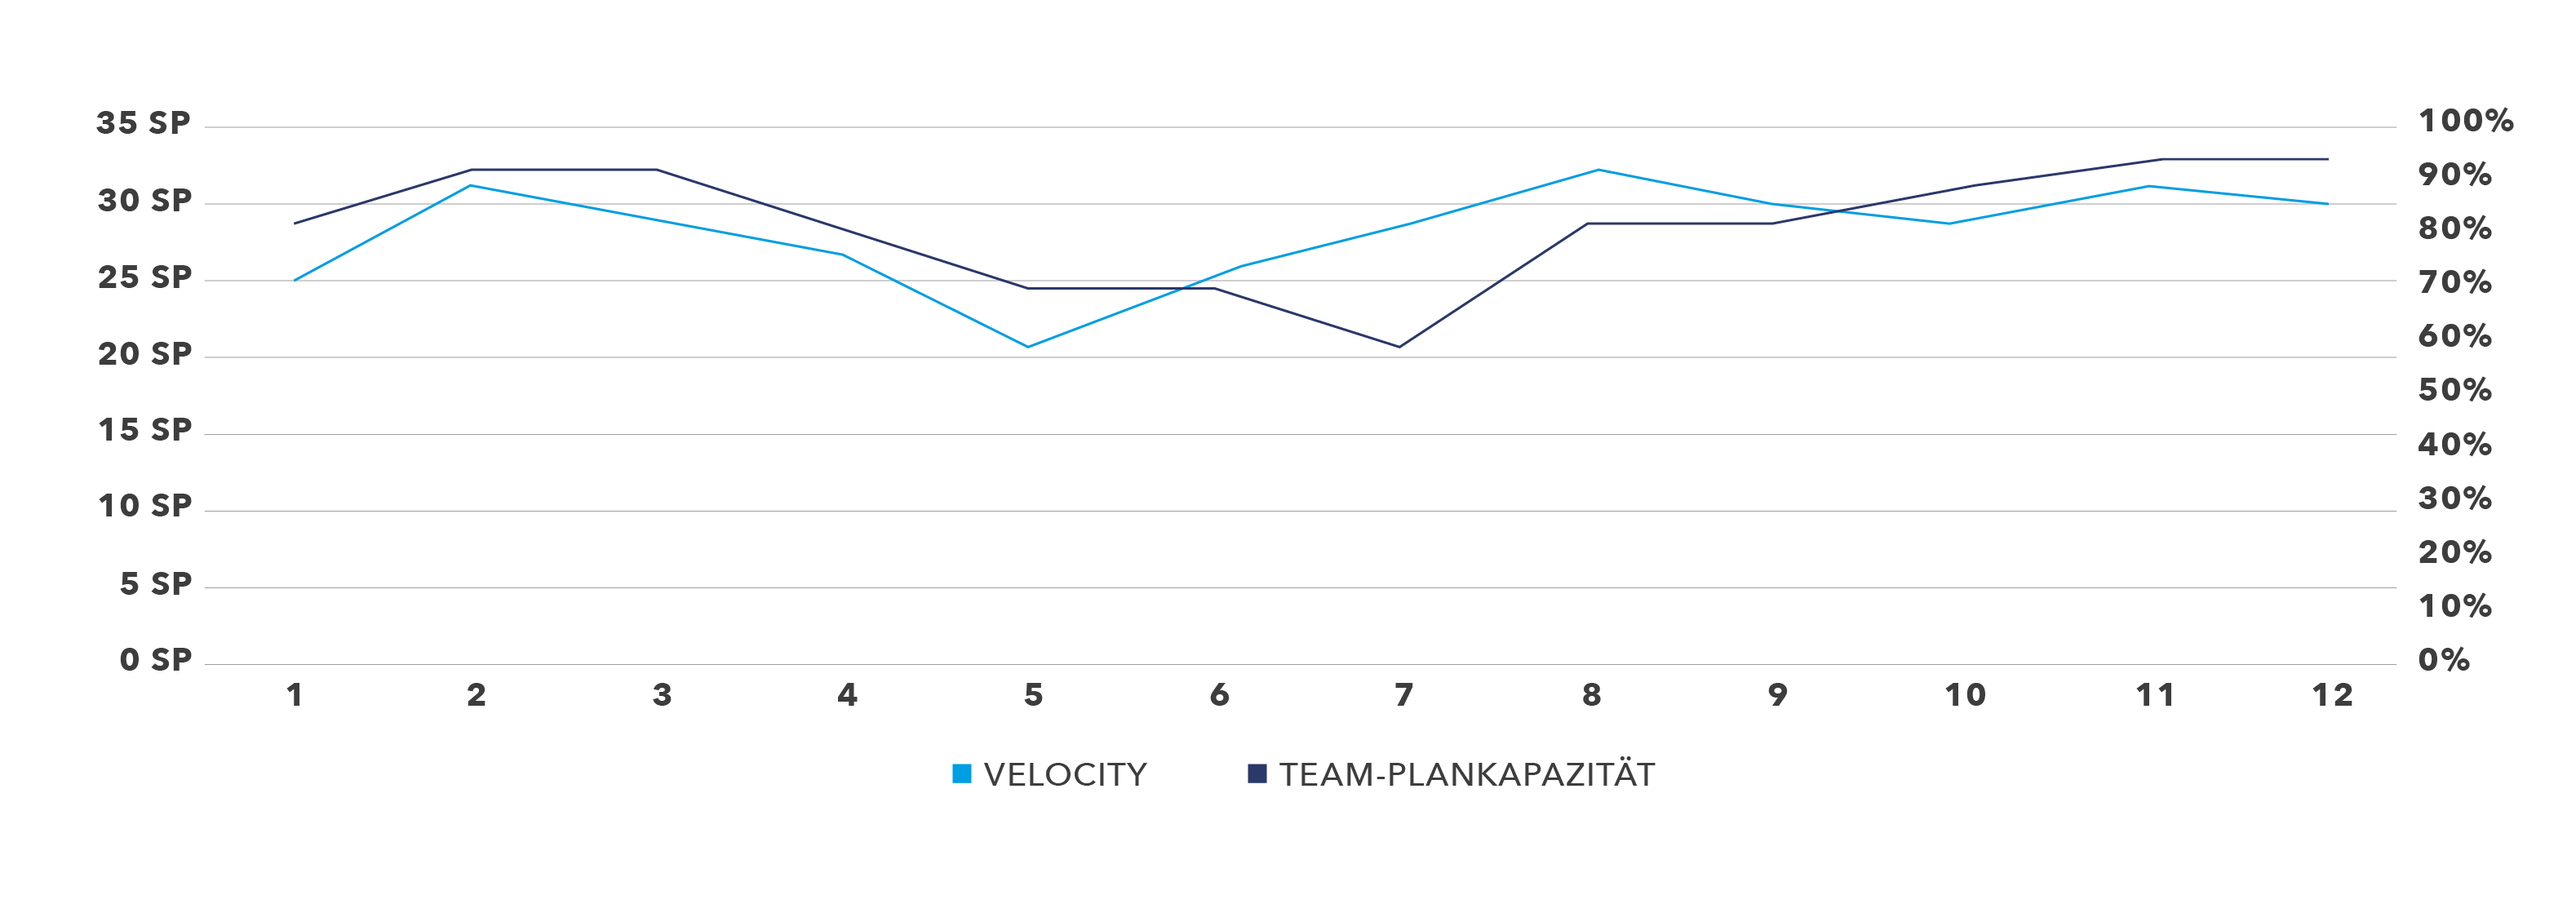 Team Plankapazität und Velocity